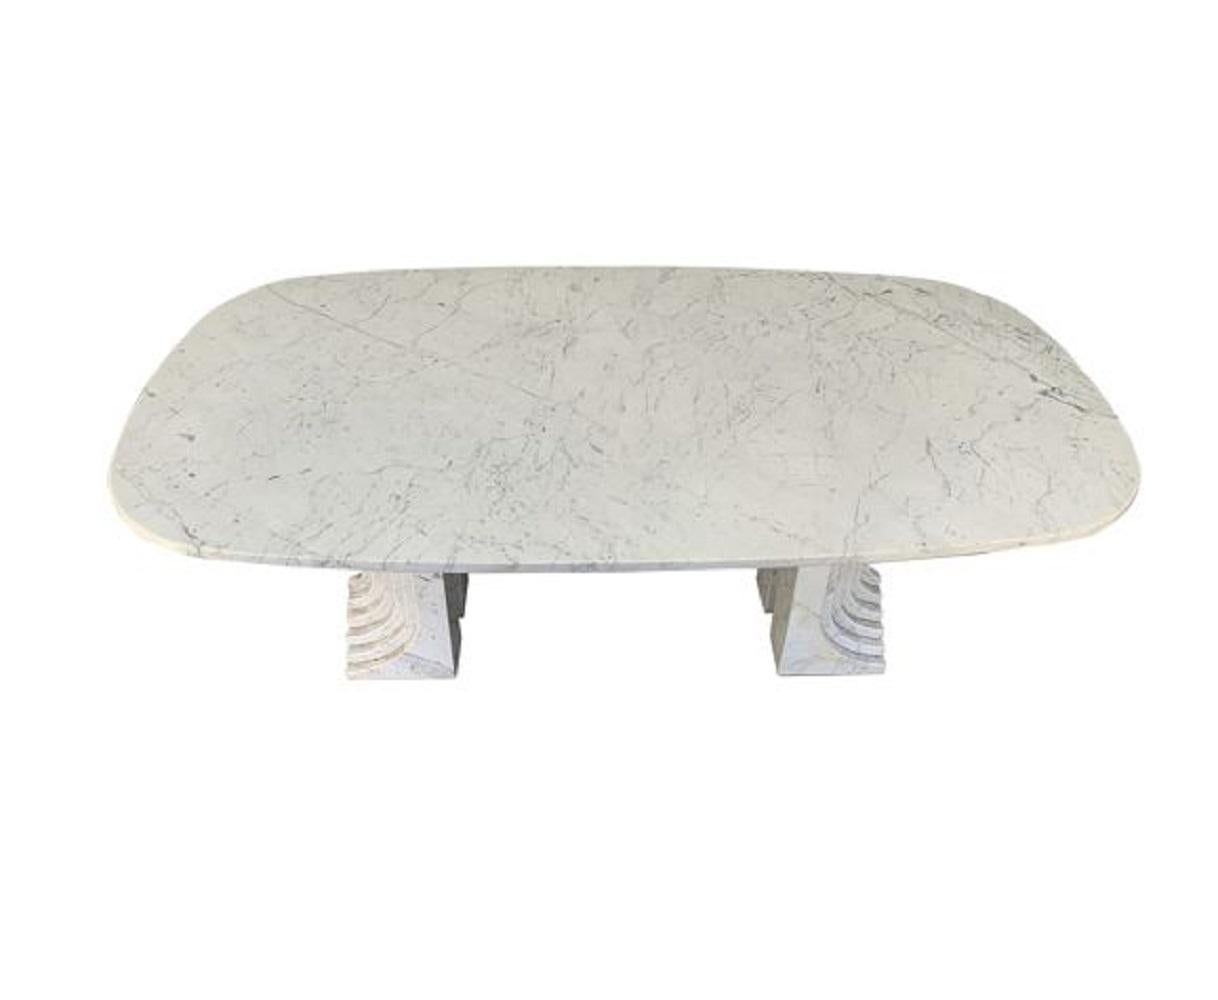 Carrara marble table.